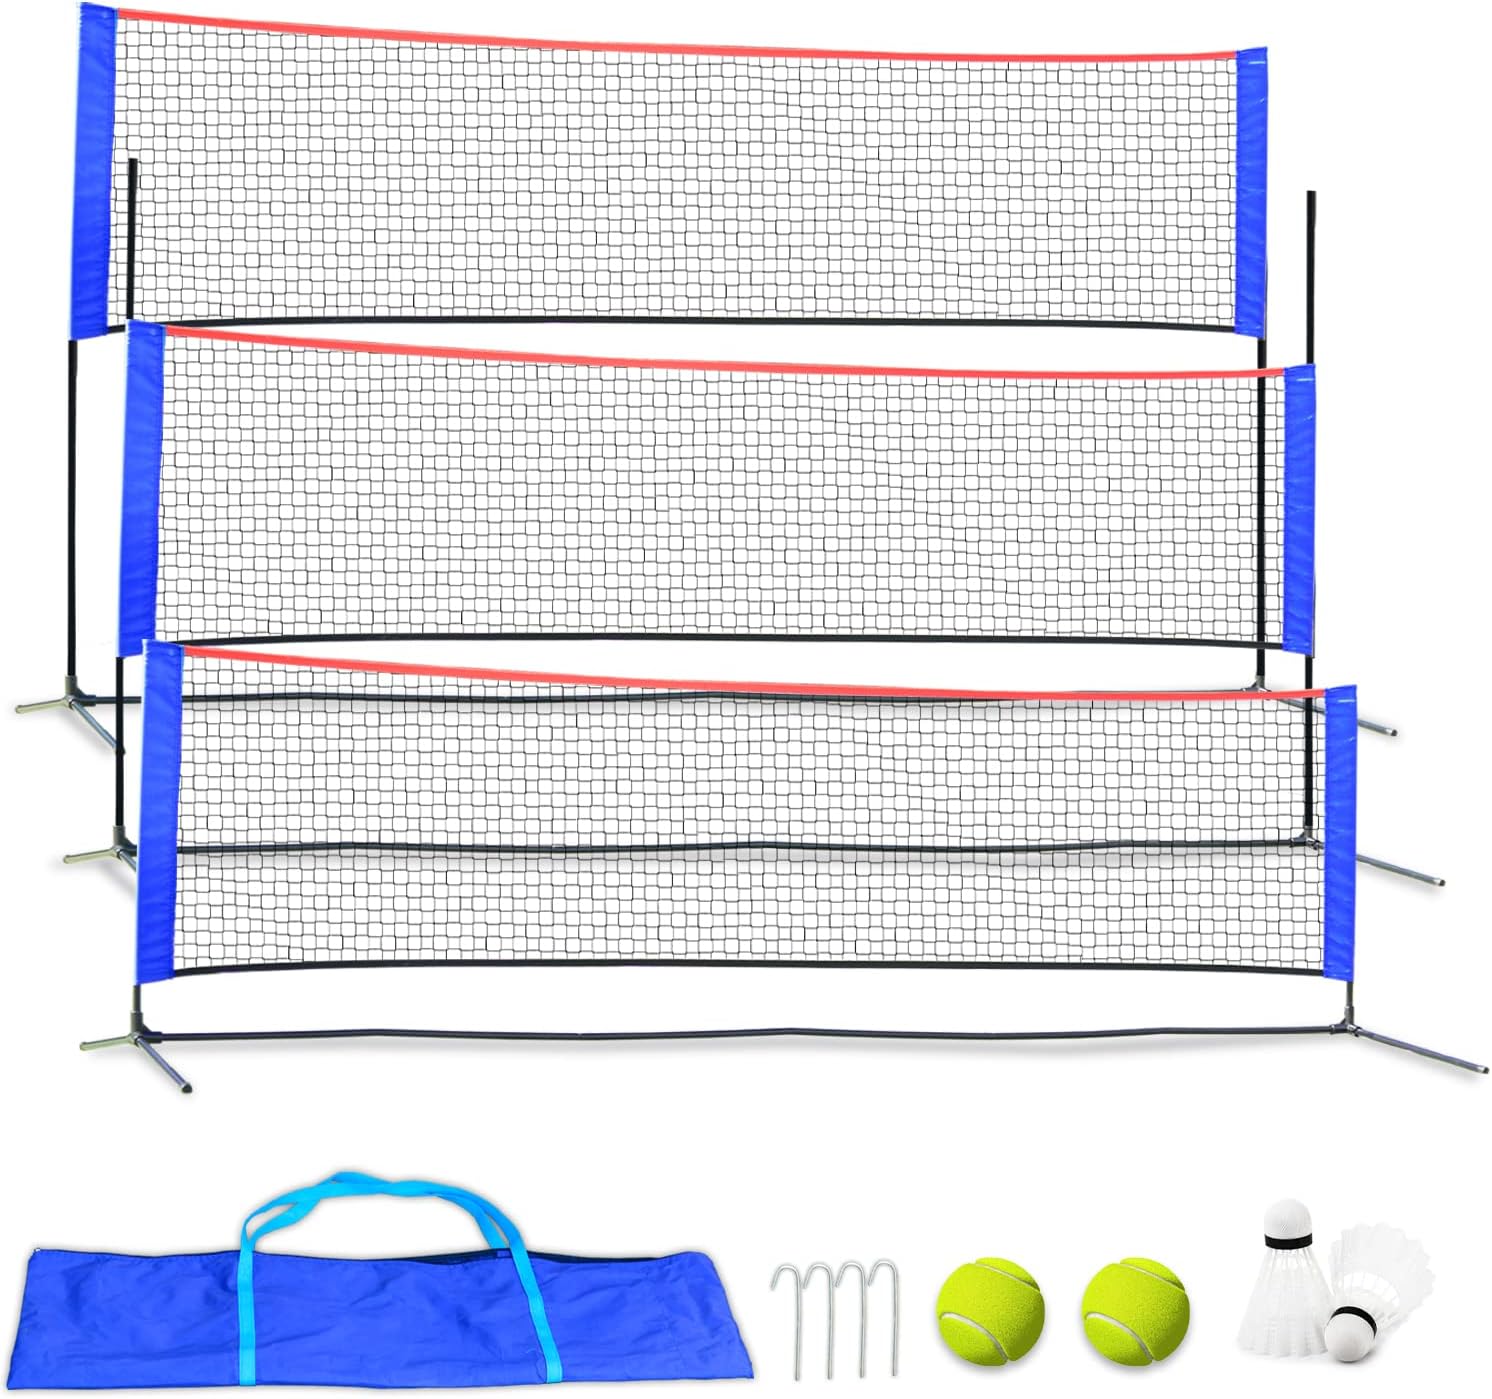 Children's tennis net, badminton net, tennis net for adults, includes 2 badminton and 2 tennis balls.